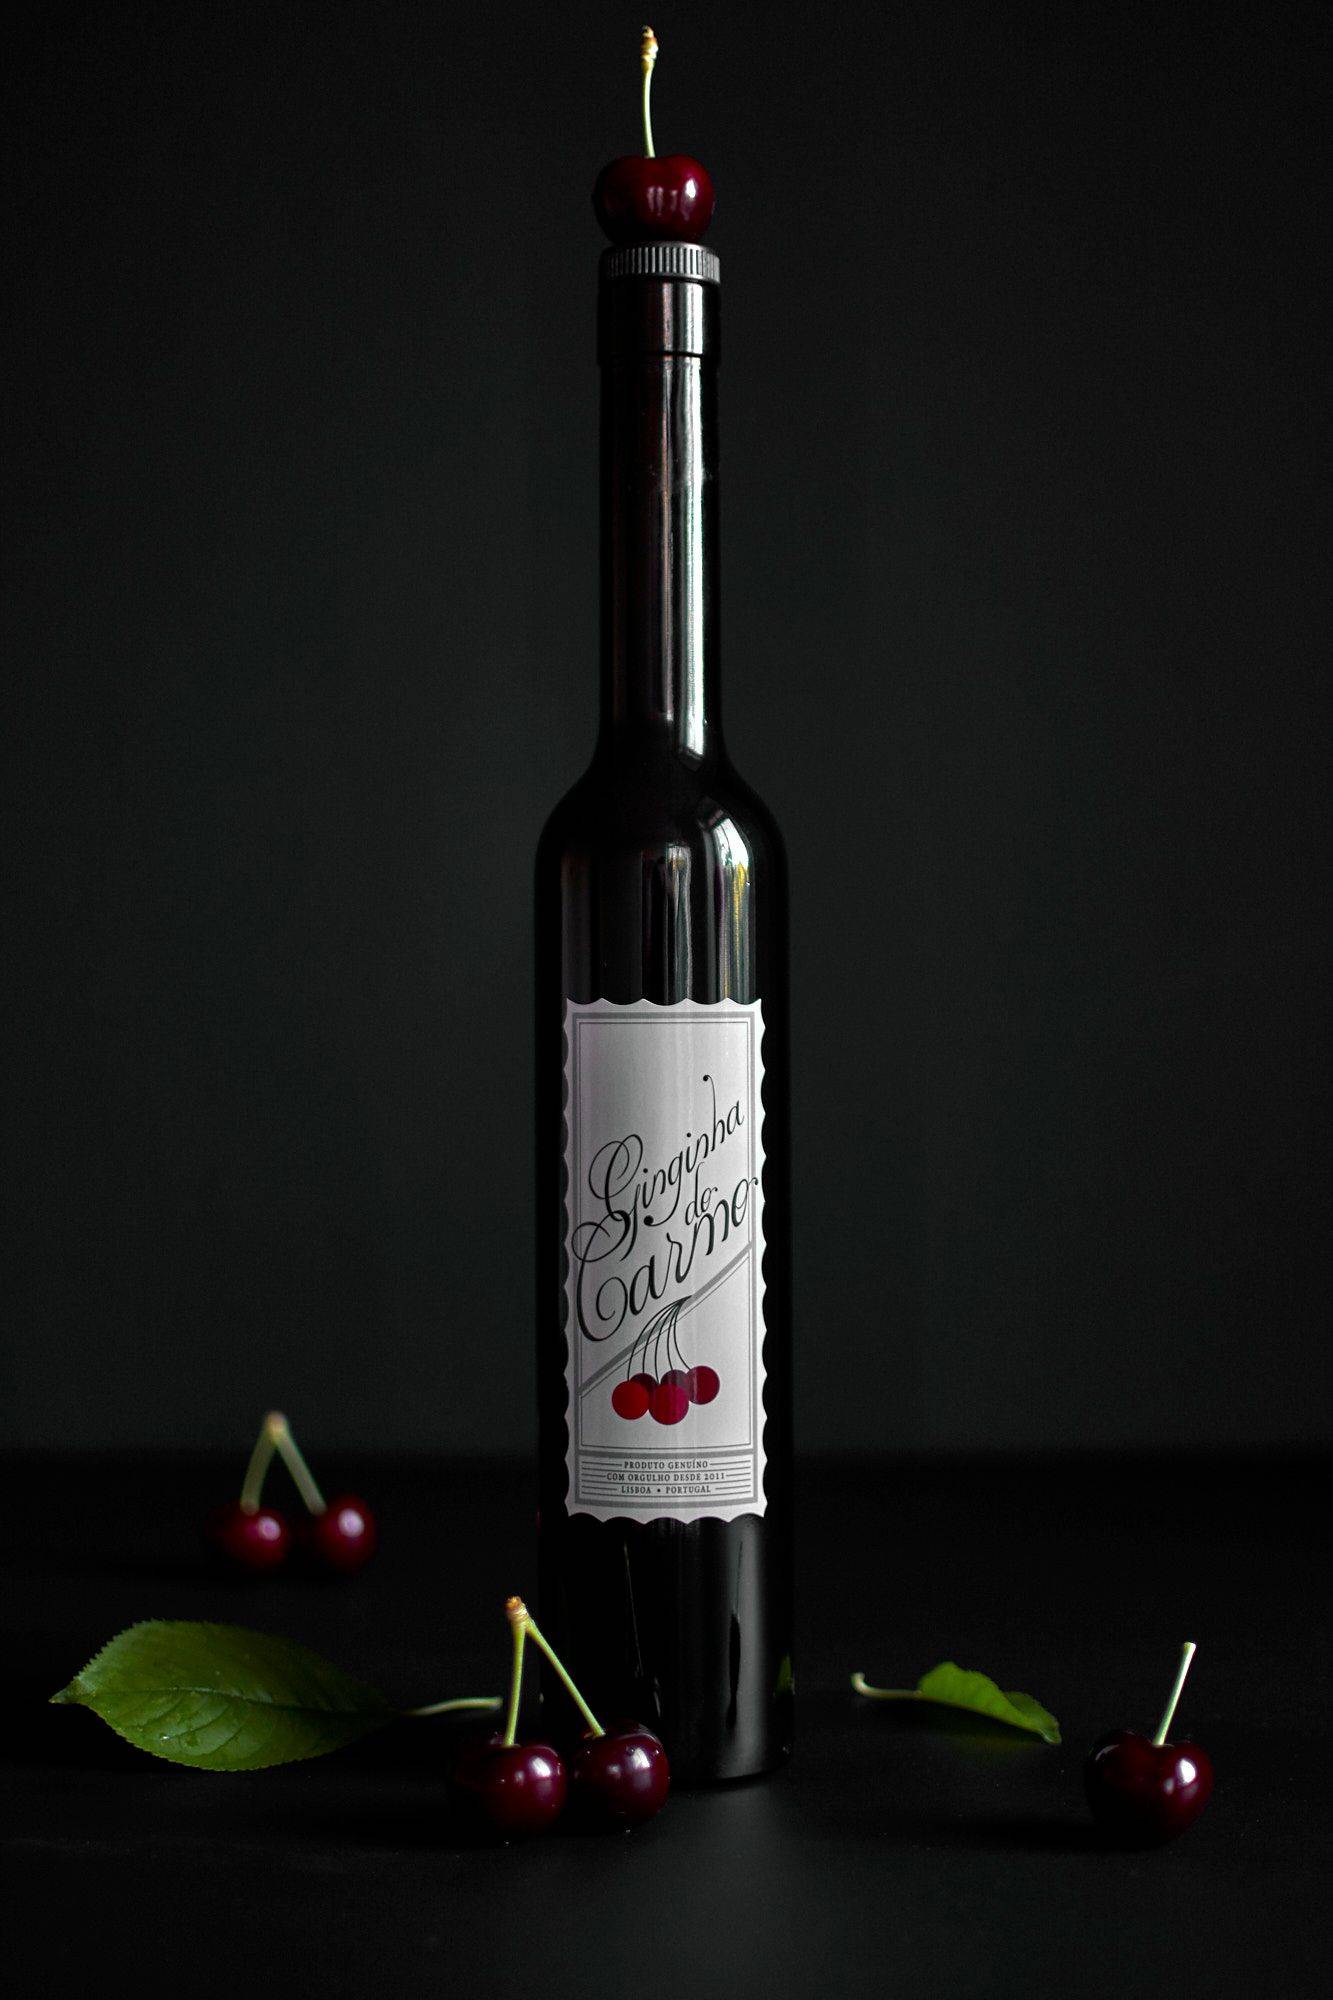 portuguese ginja cherry liquor on black background